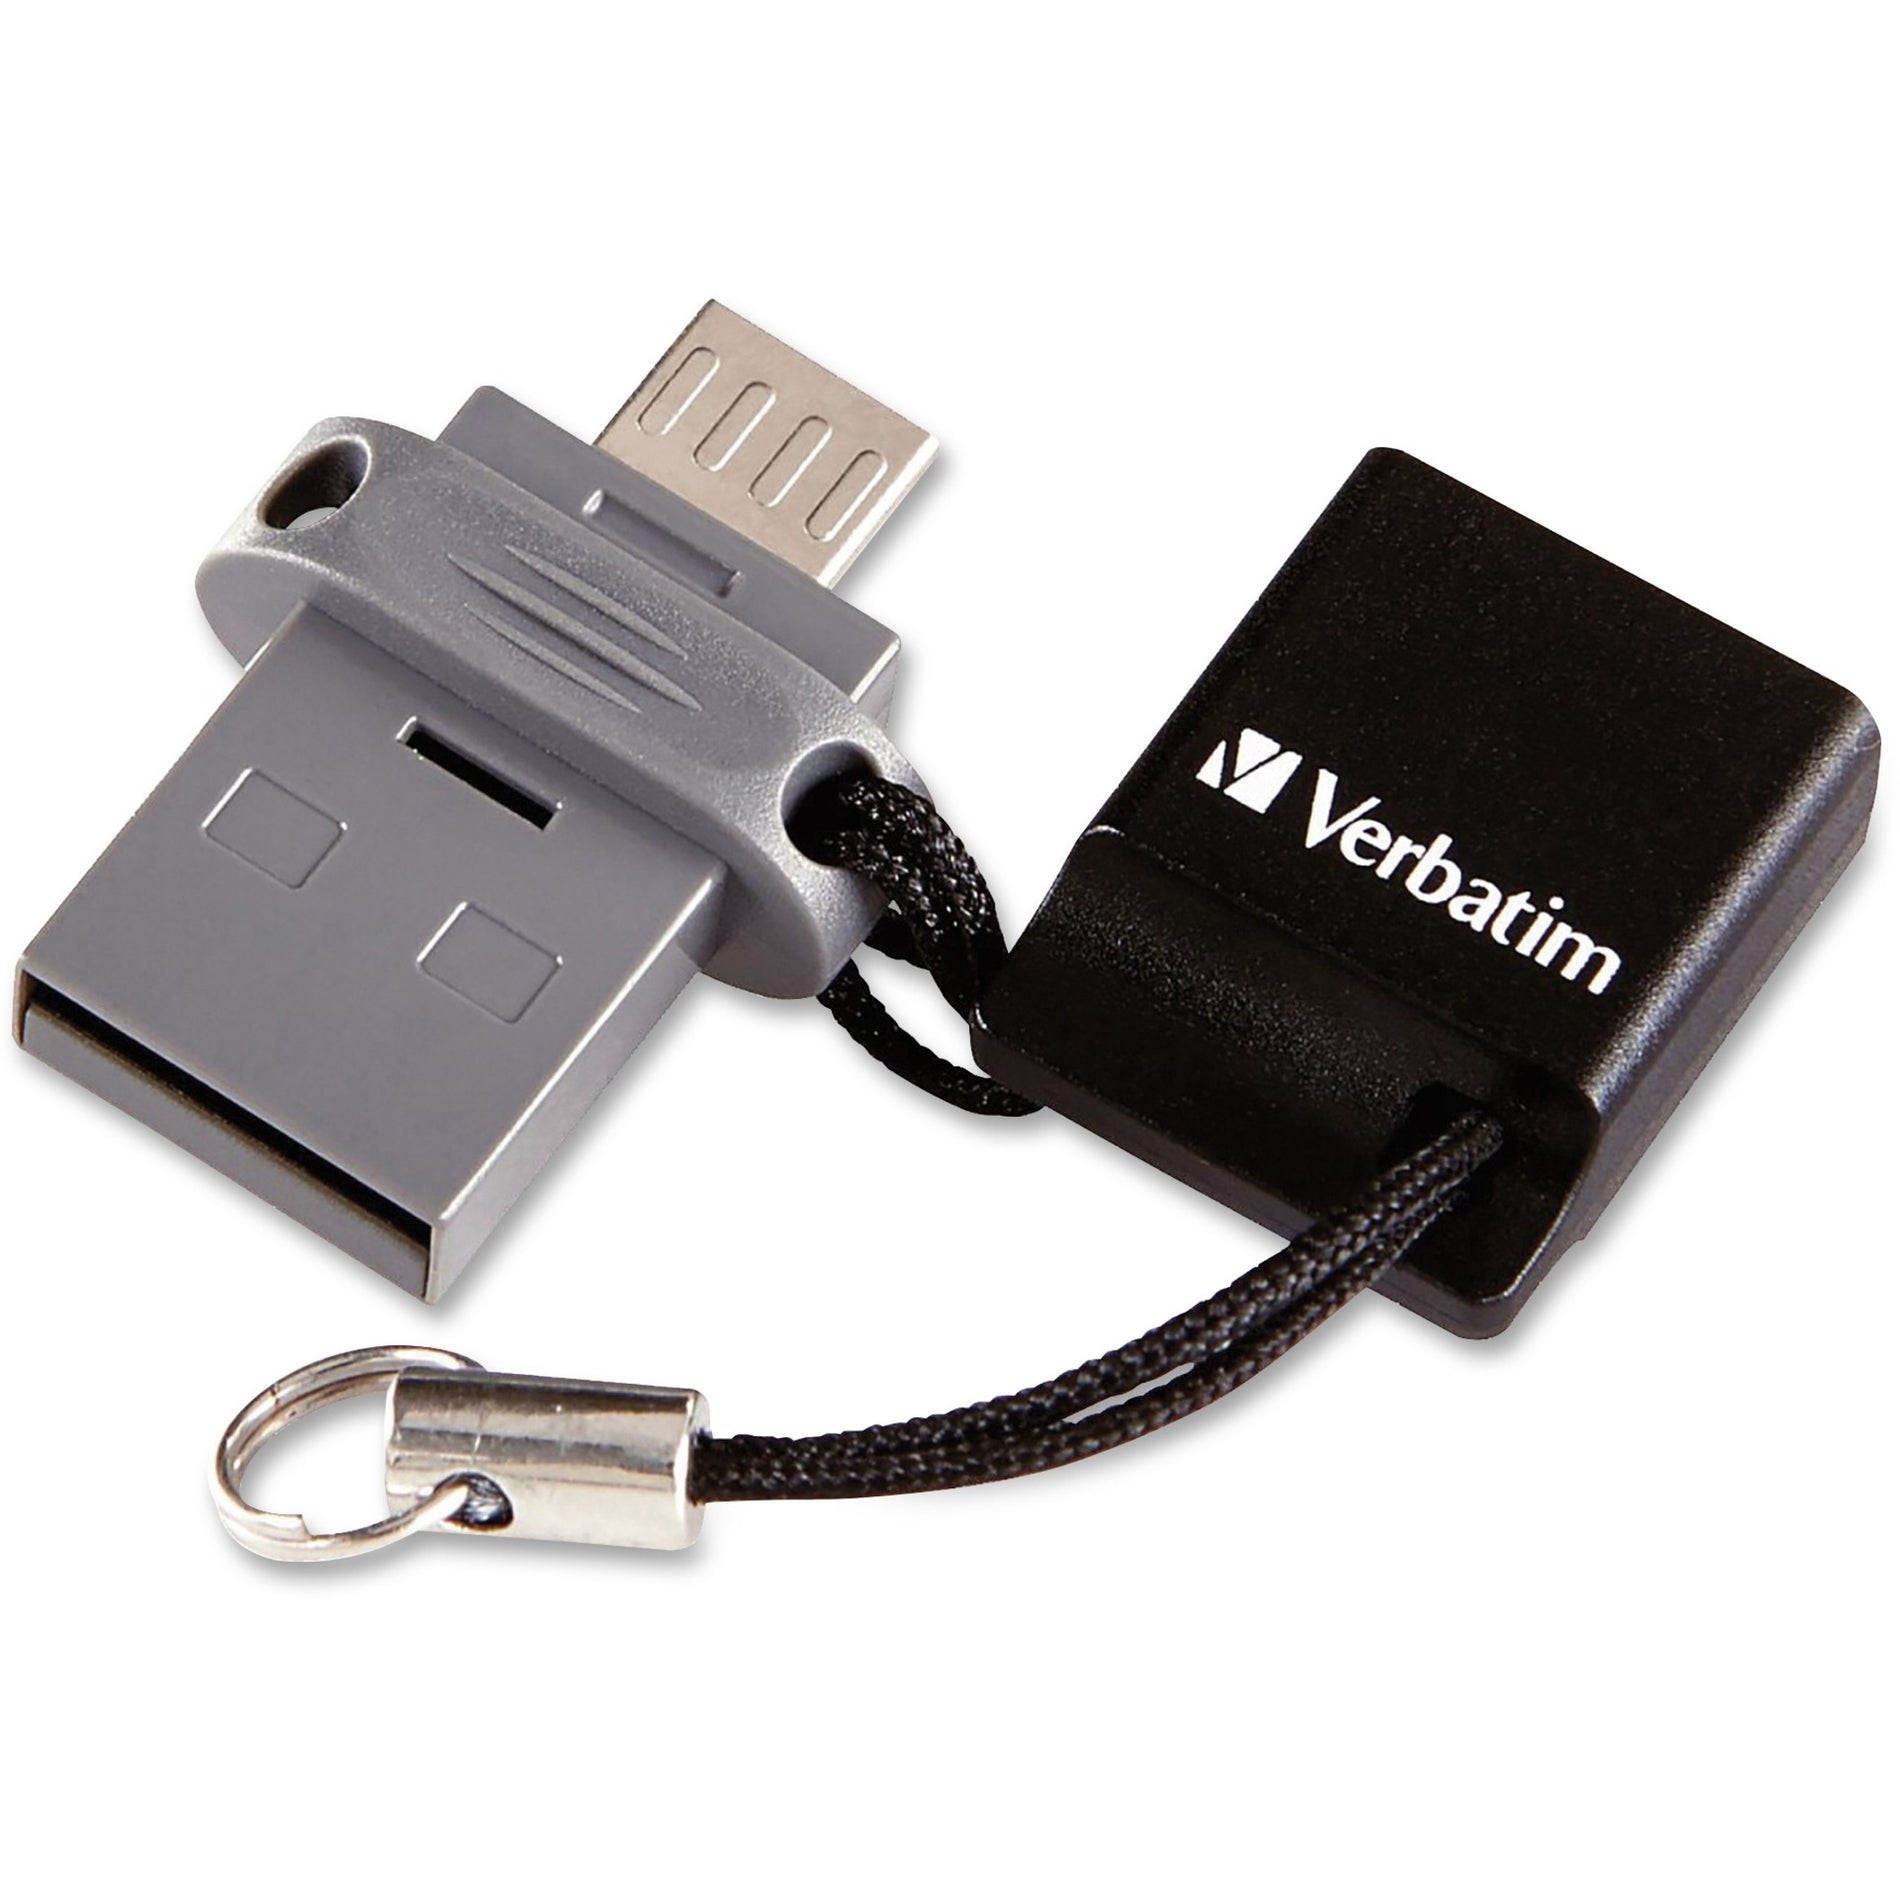 Verbatim 99140 Store 'n' Go Dual USB Flash Drive, 64GB, Black/Gray